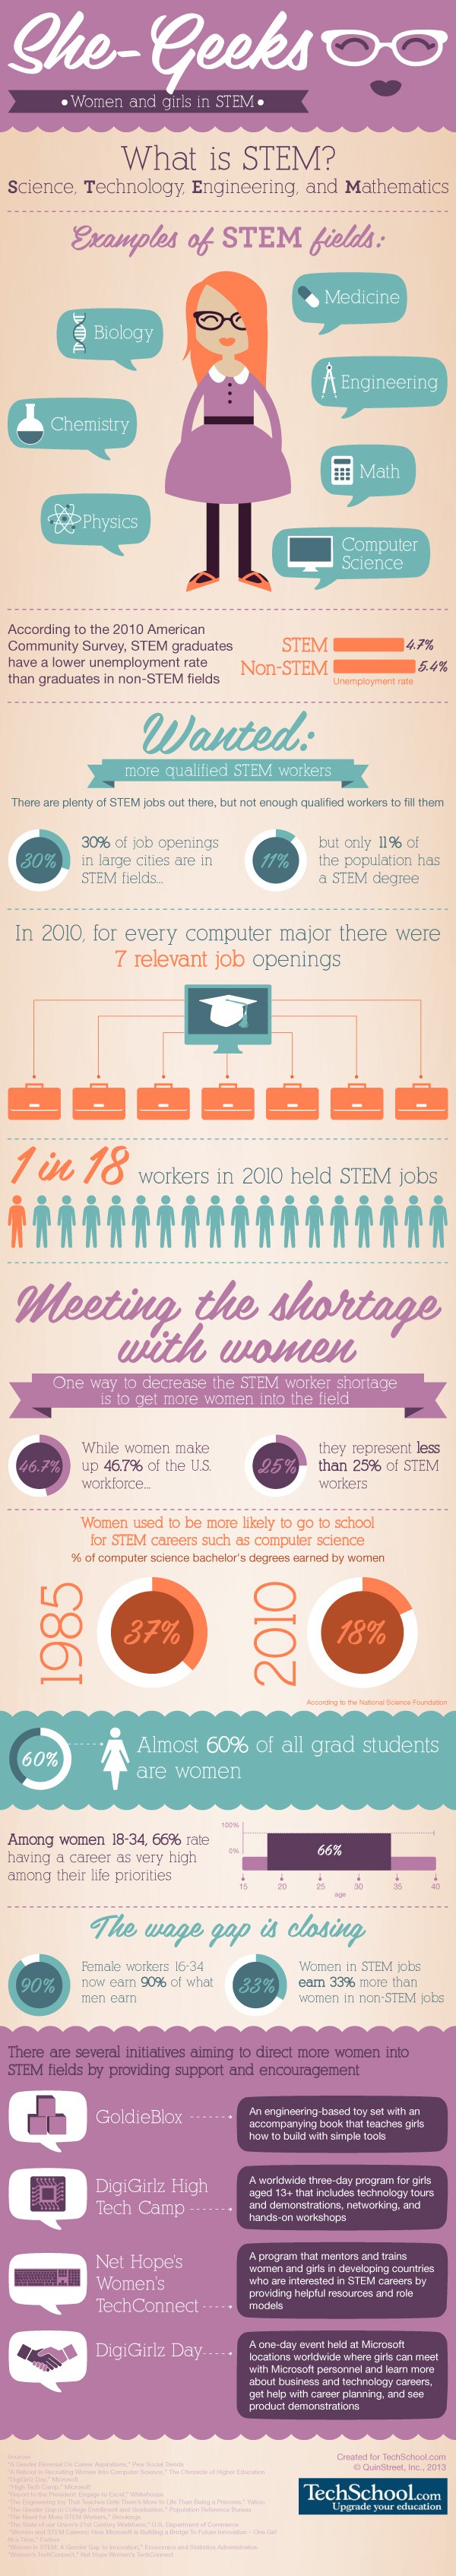 She-Geek infographic - Women in STEM